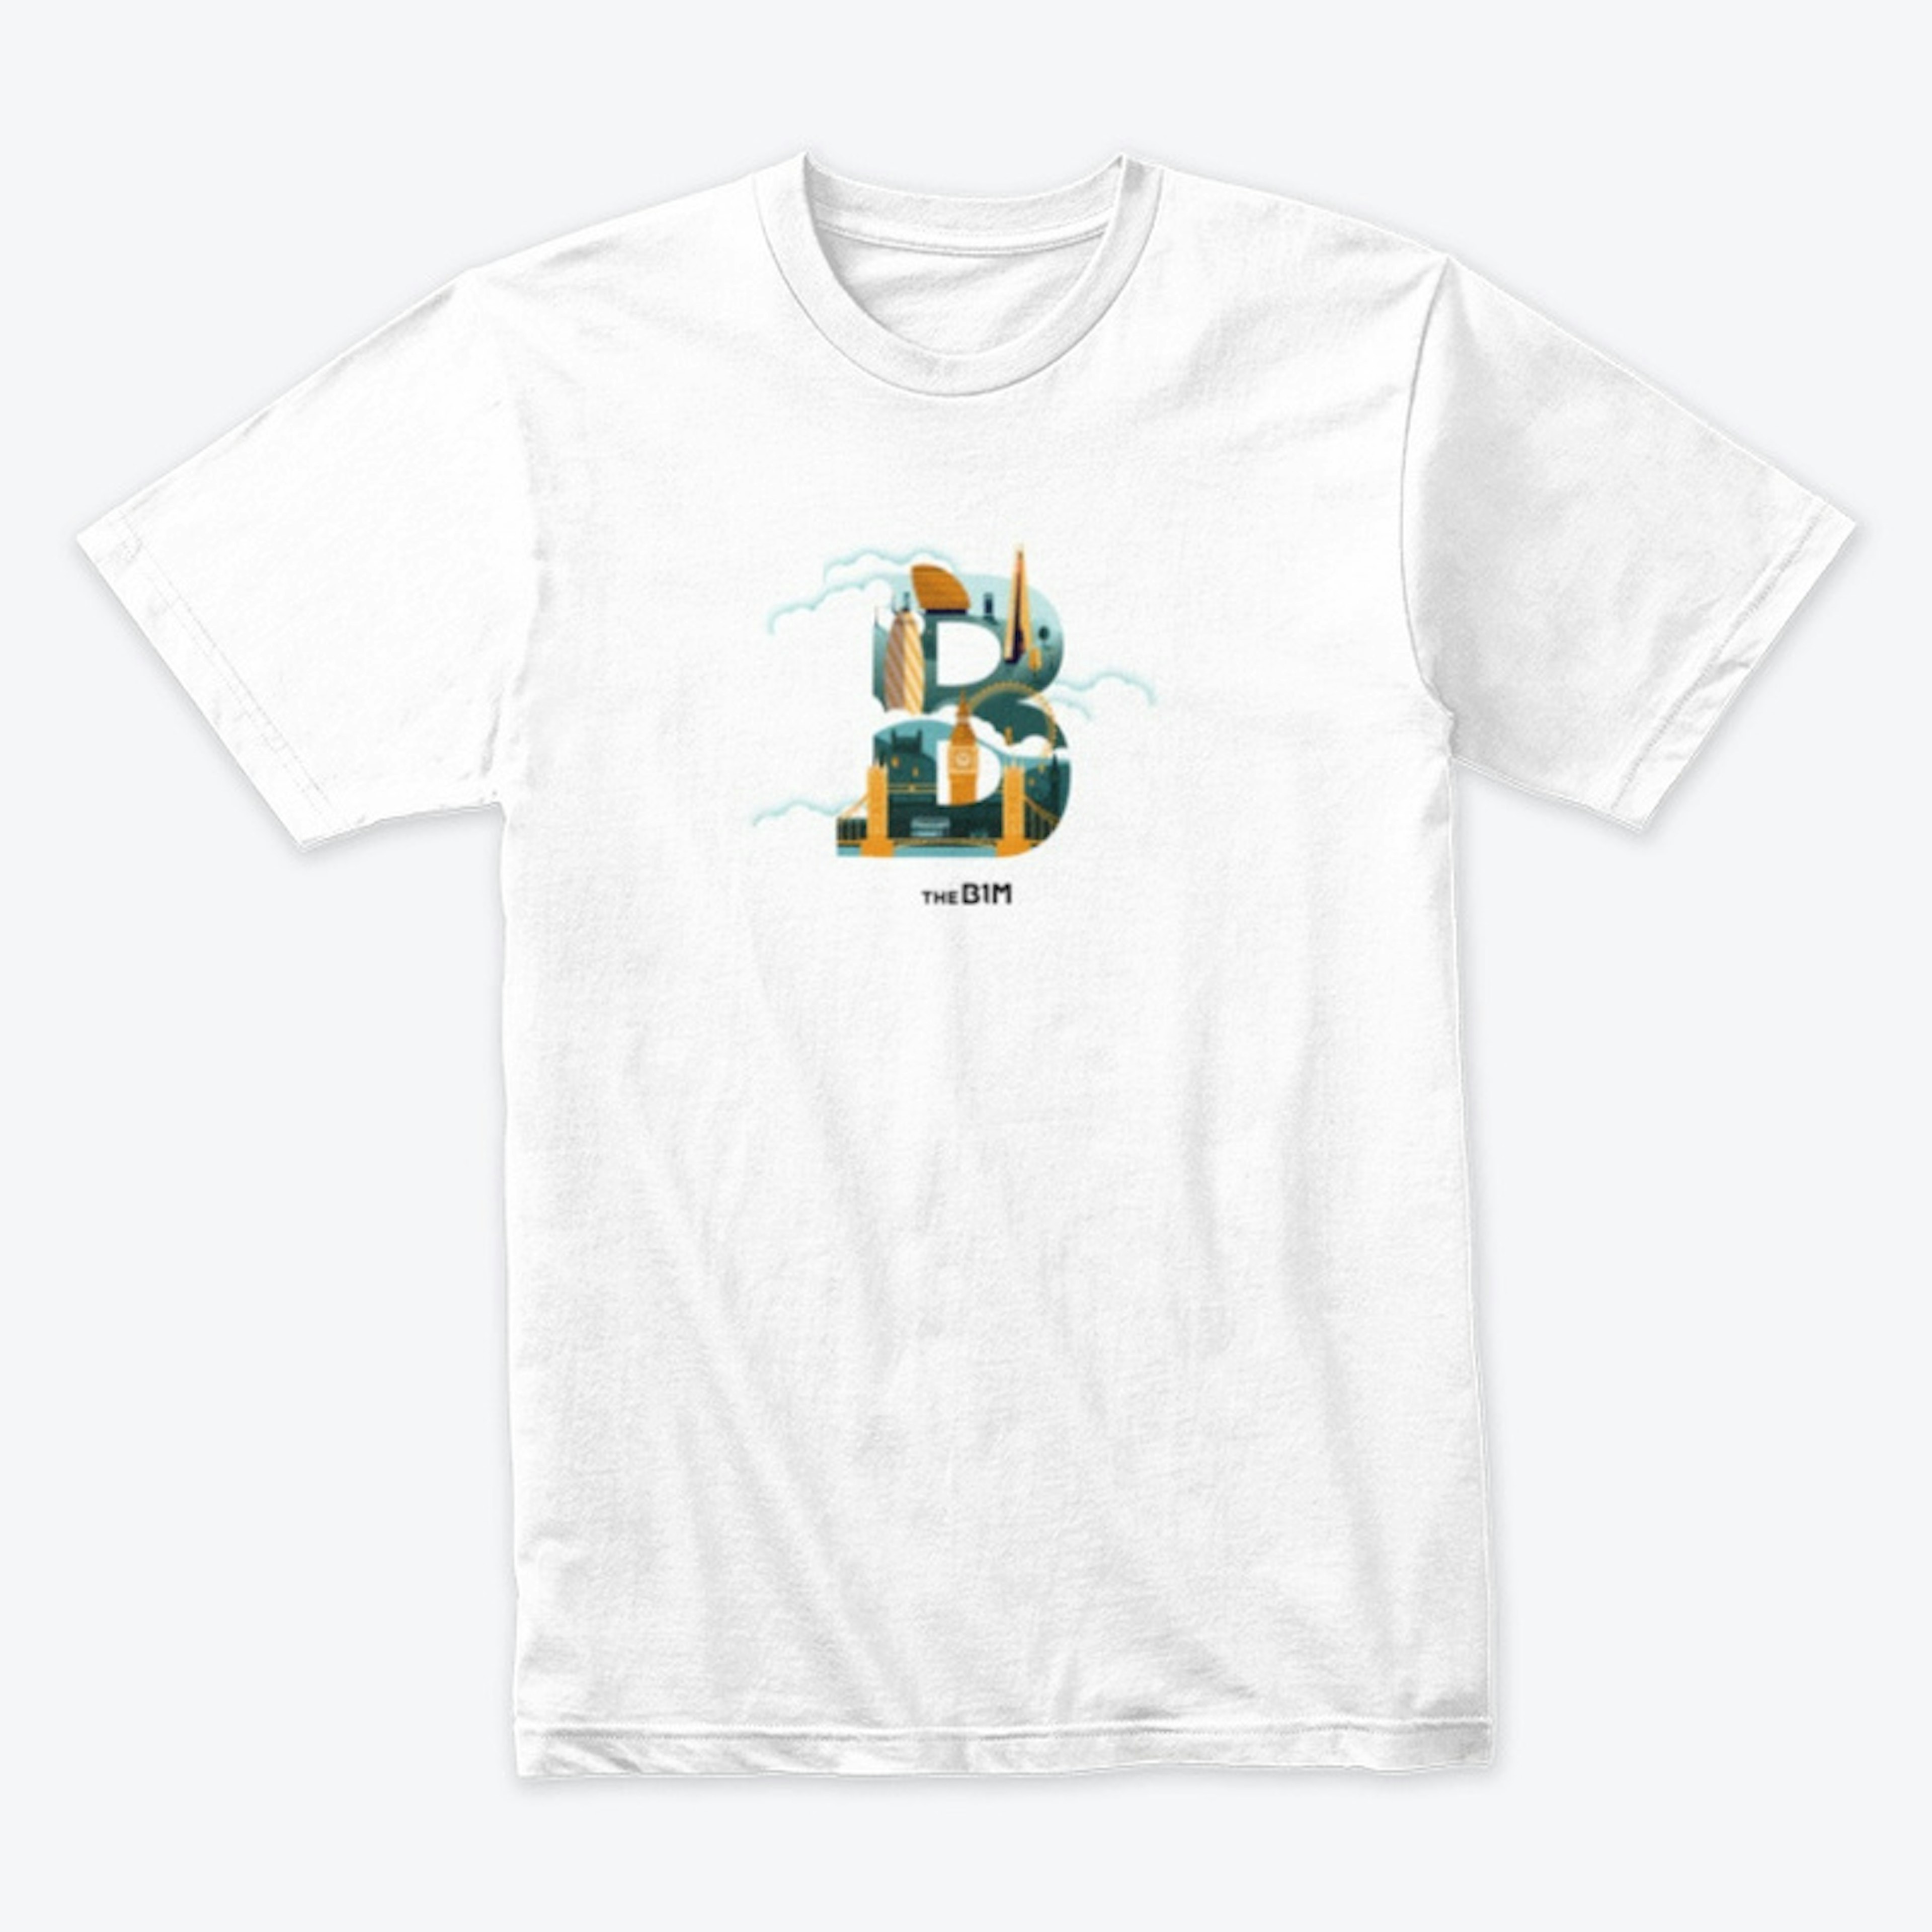 London by The B1M - Premium T-Shirt